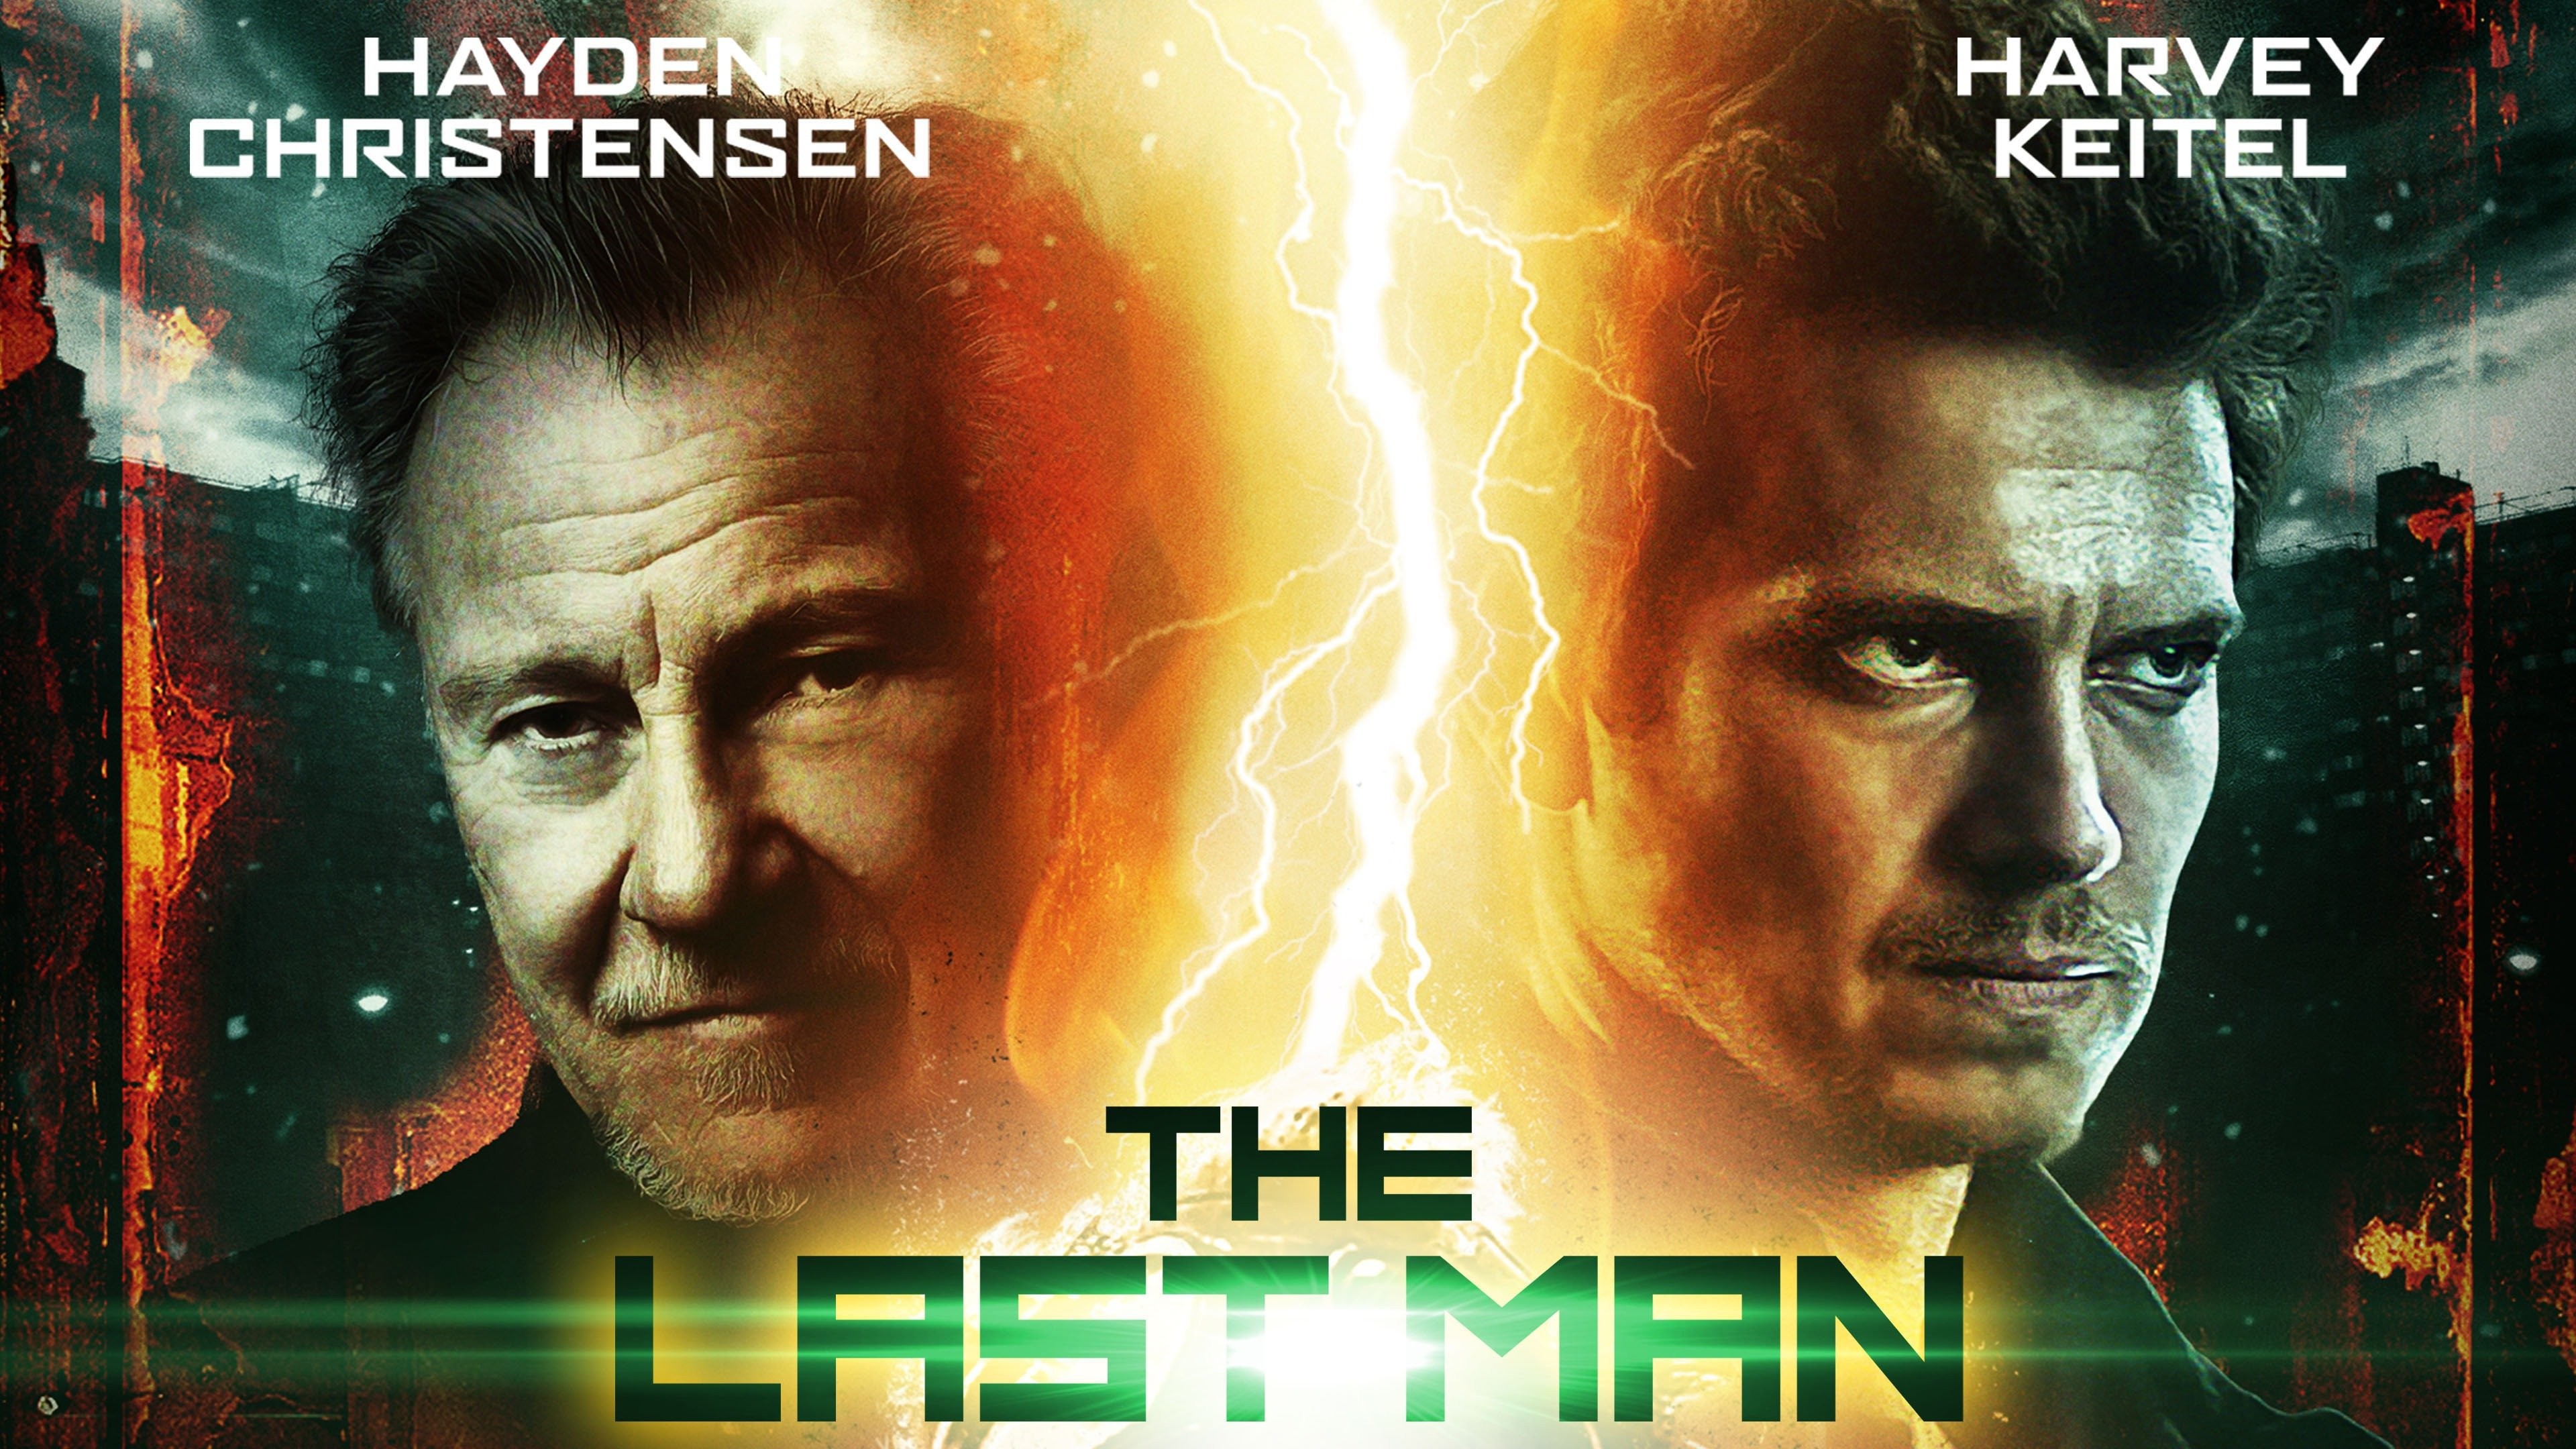 The Last Man - Rotten Tomatoes